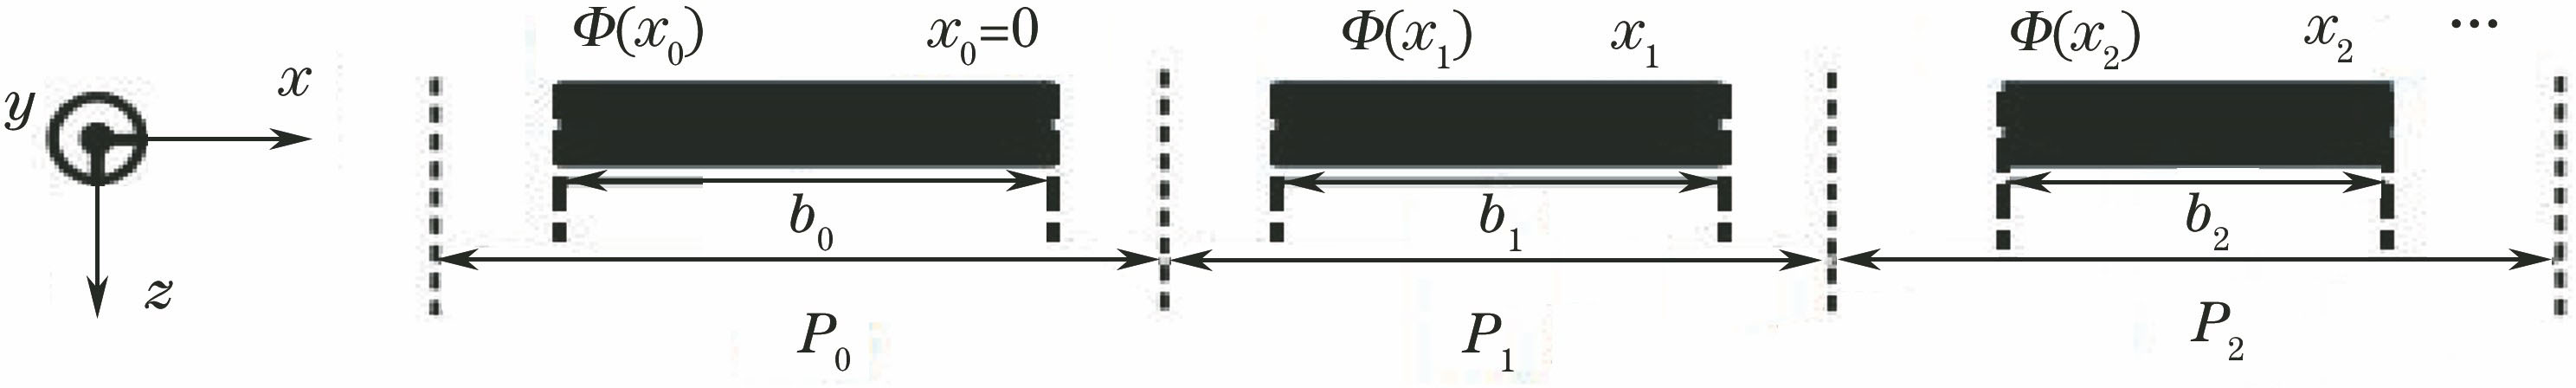 Schematic of non-periodic sub-wavelength grating structure